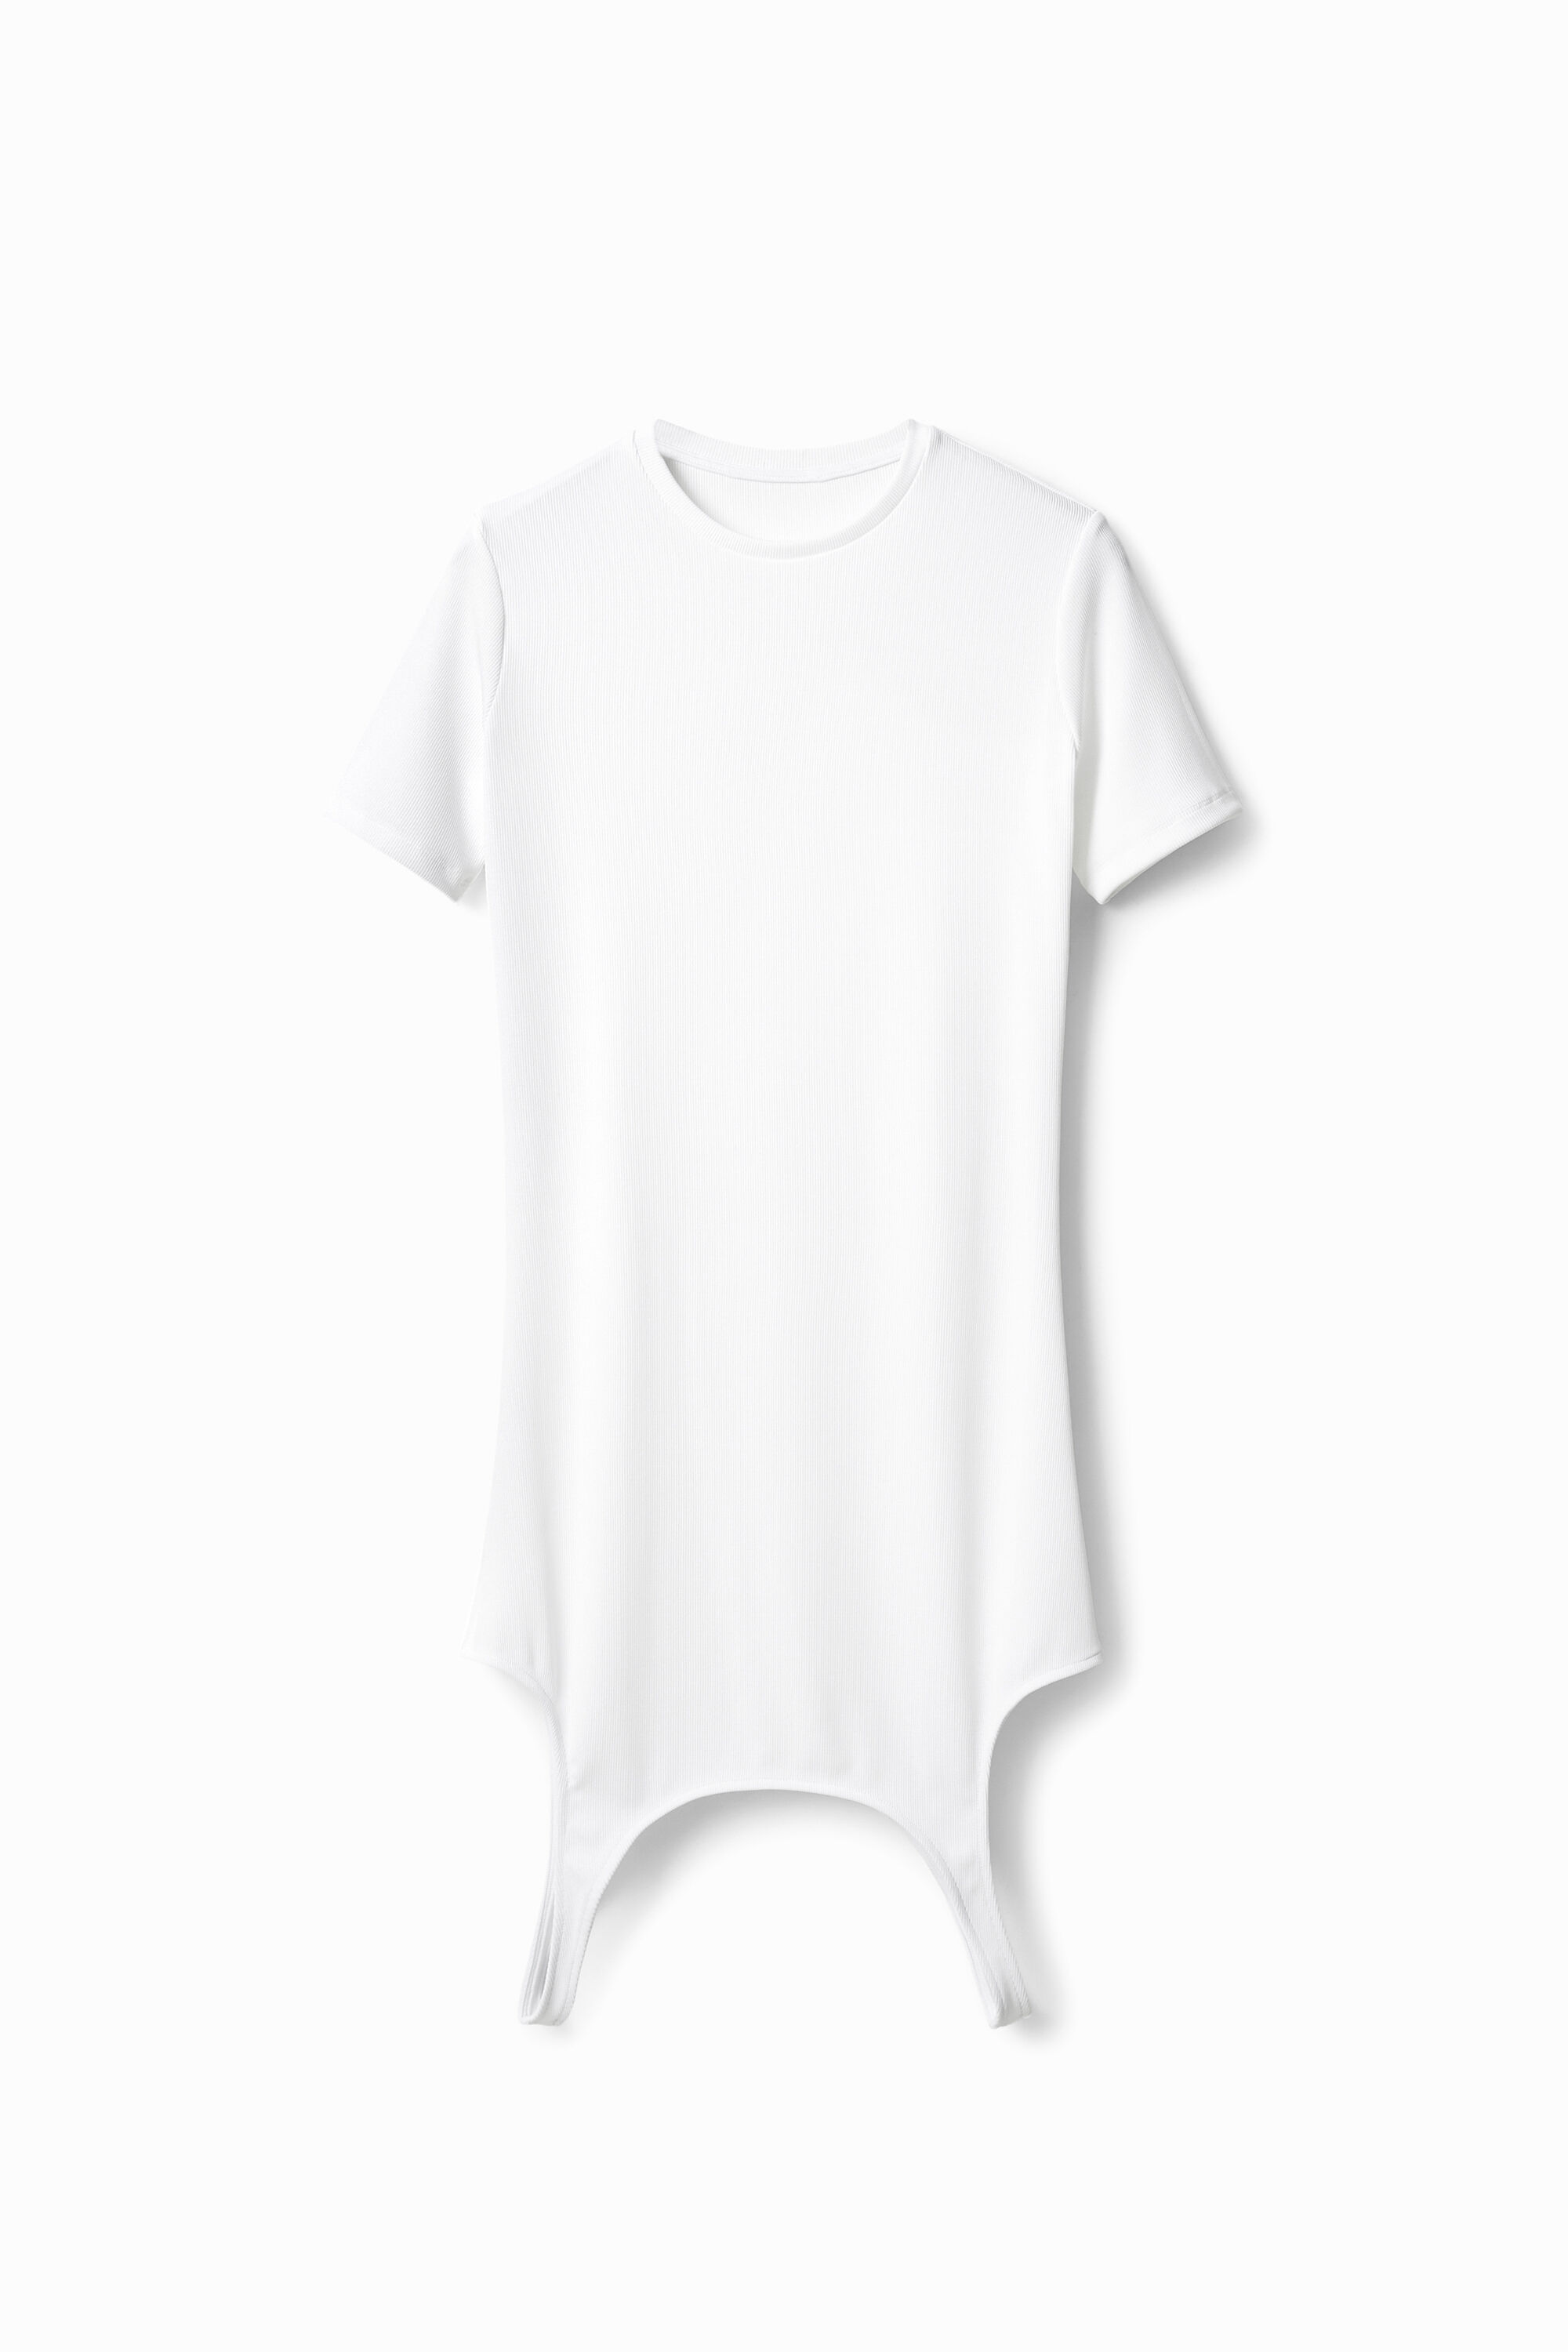 Maitrepierre multiposition T-shirt dress - WHITE - S